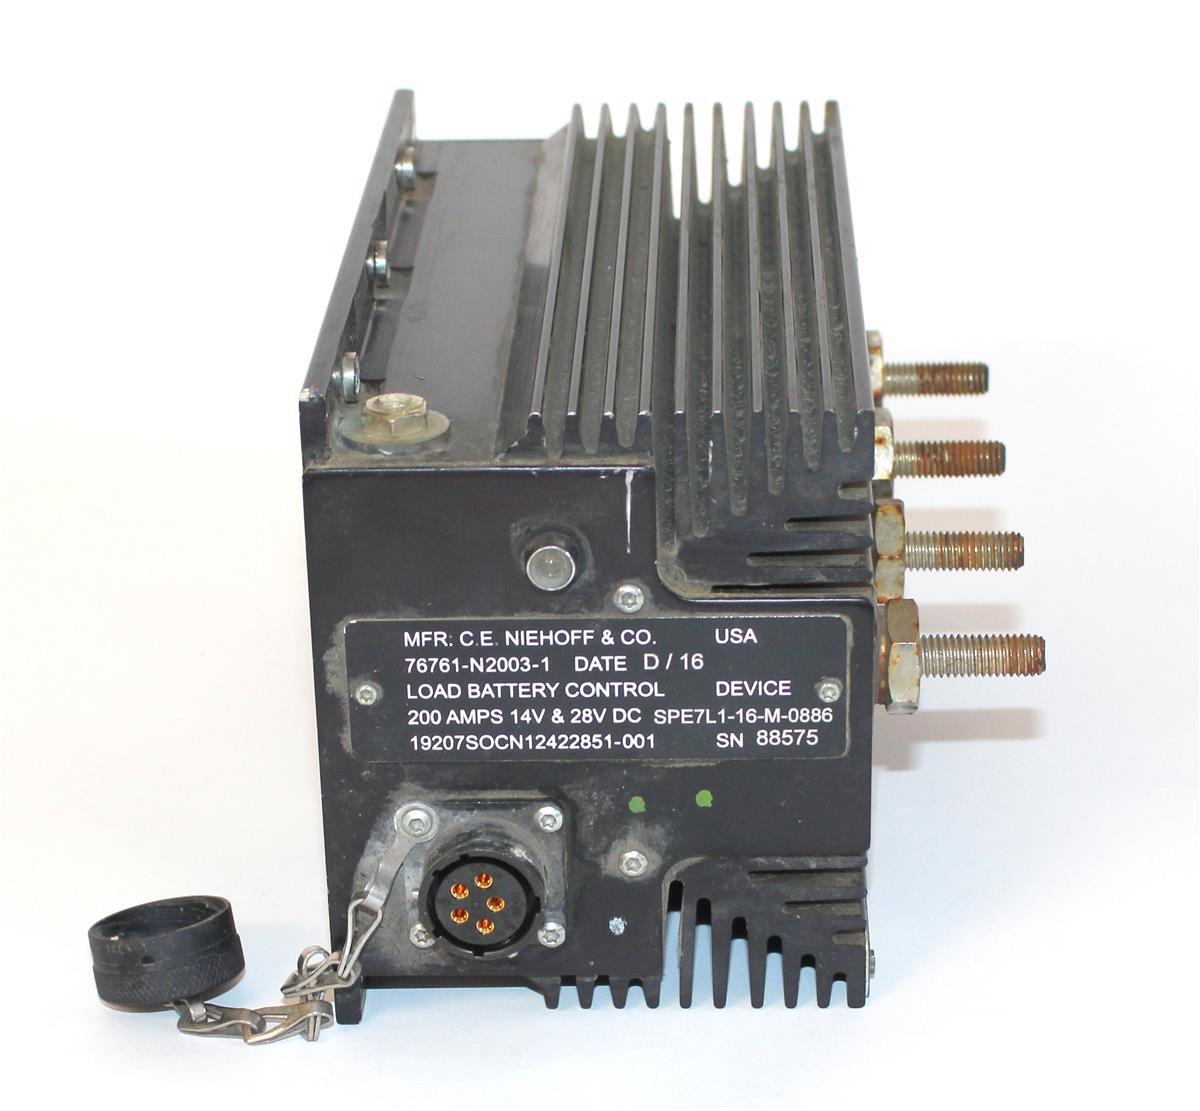 COM-5852 | COM-5852 CE Niehoff Co Load Battery Device (5).JPG